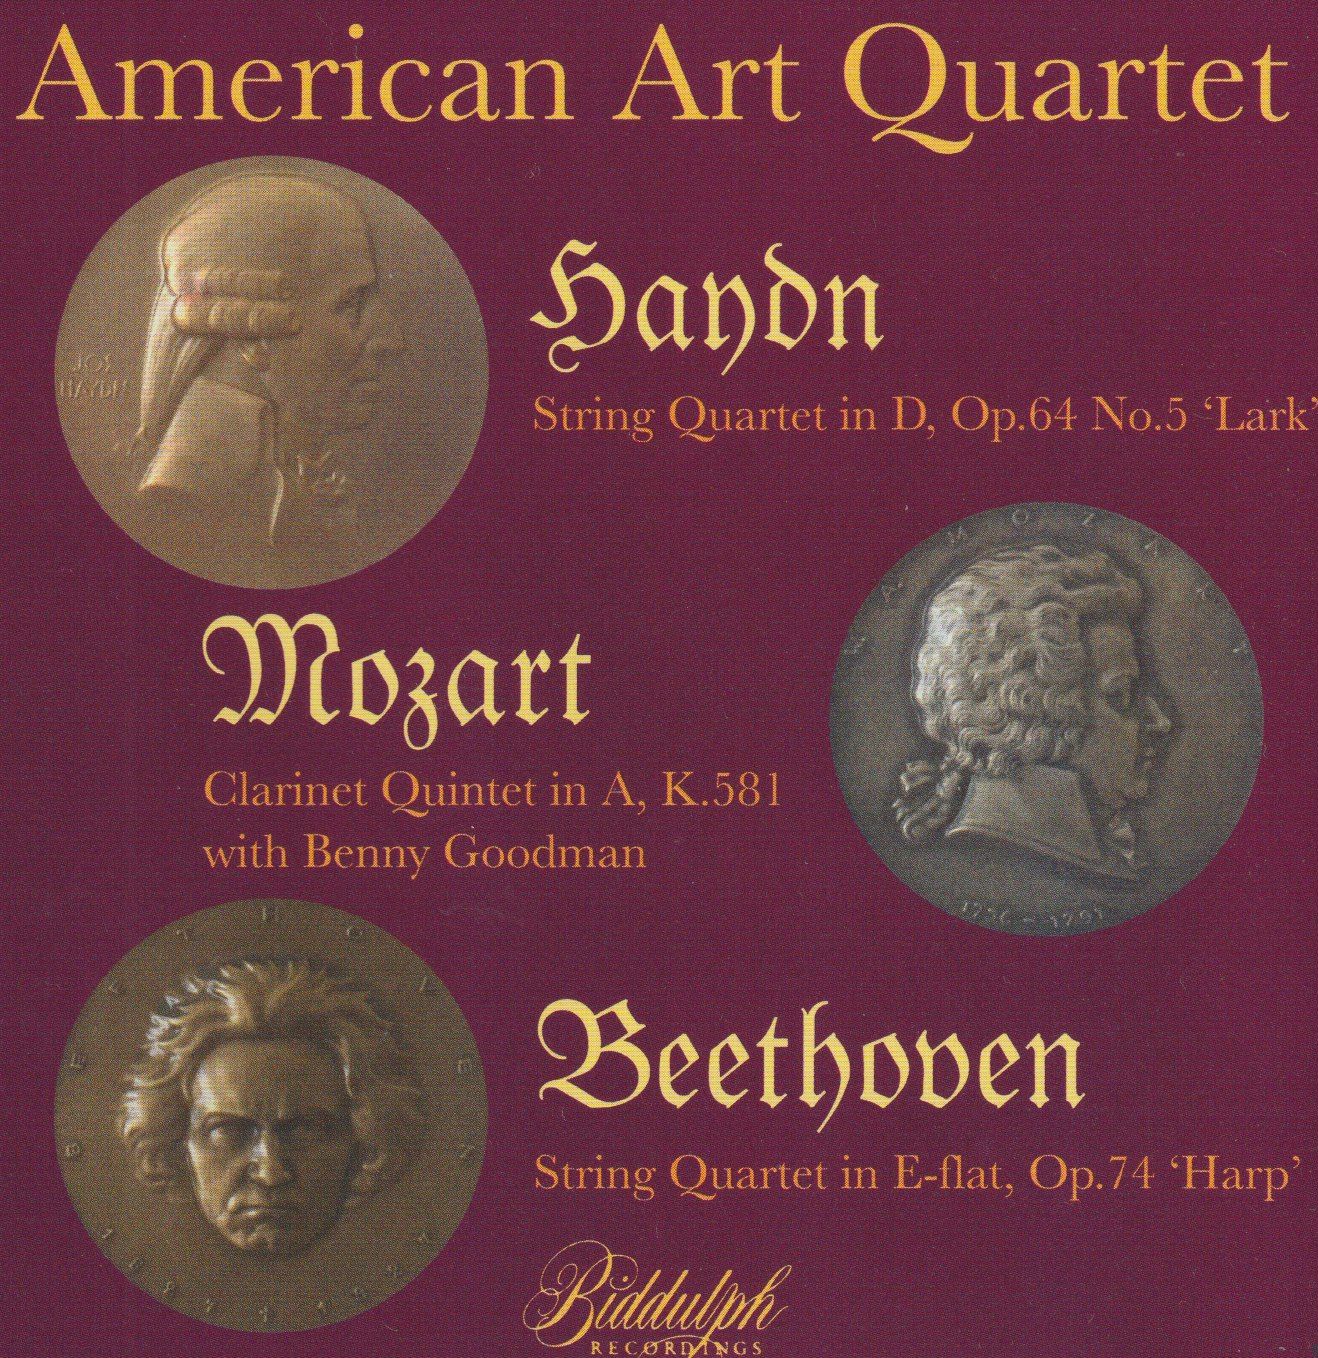 American Art Quartet plays Haydn, Mozart & Beethoven